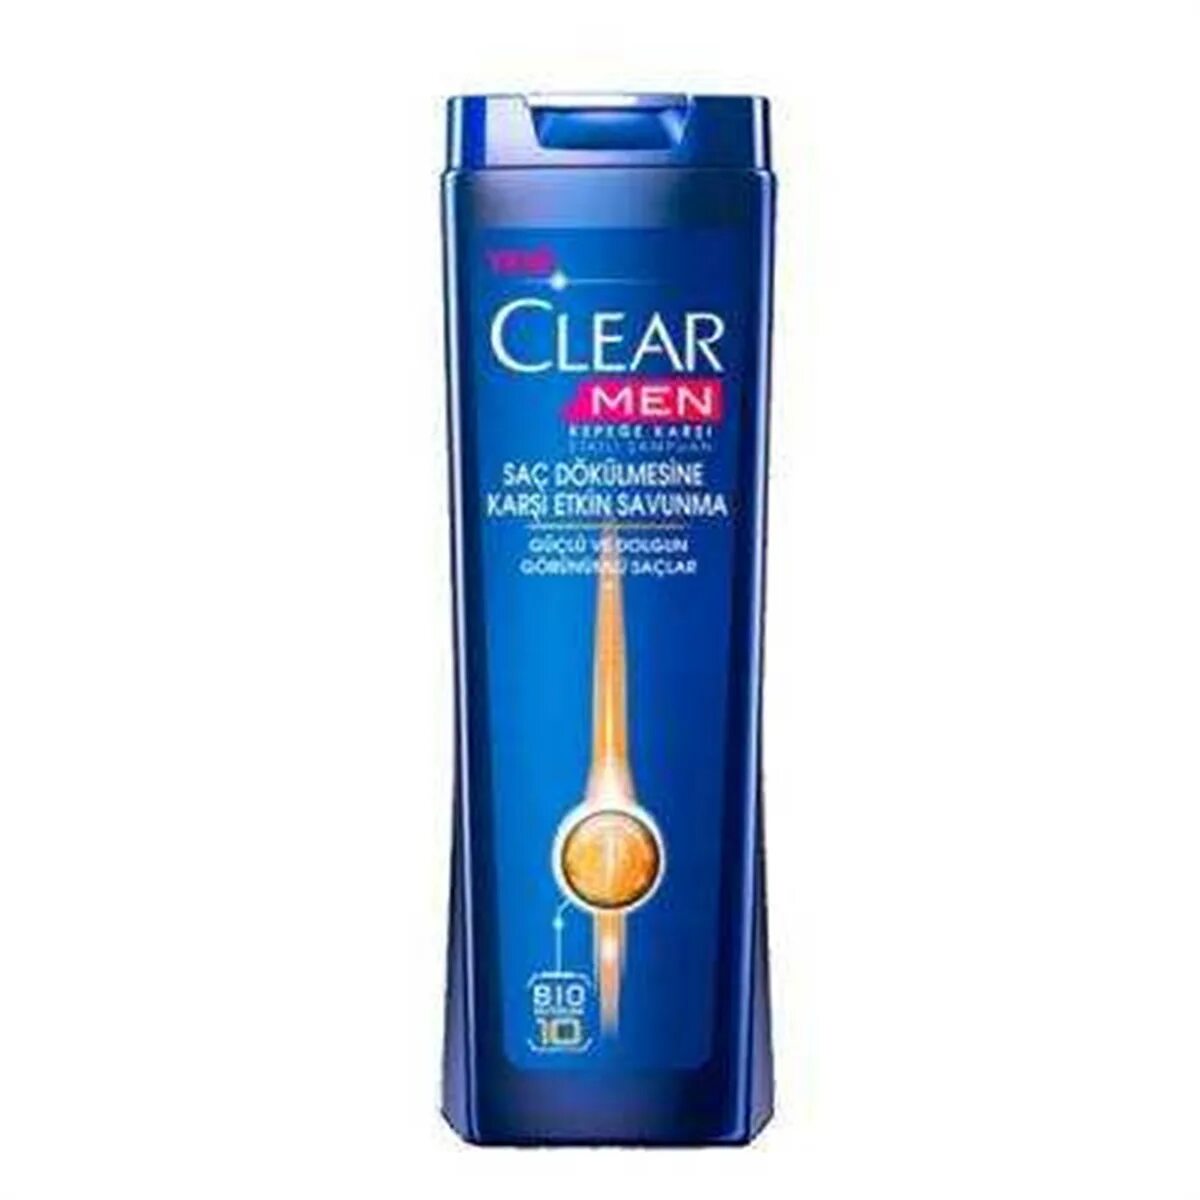 Clear ml. Clear men 610 мл. Clear men жидкая гелевая формула 380 мл. Clear men Sampuan. Шампунь Clear men cool Sport.